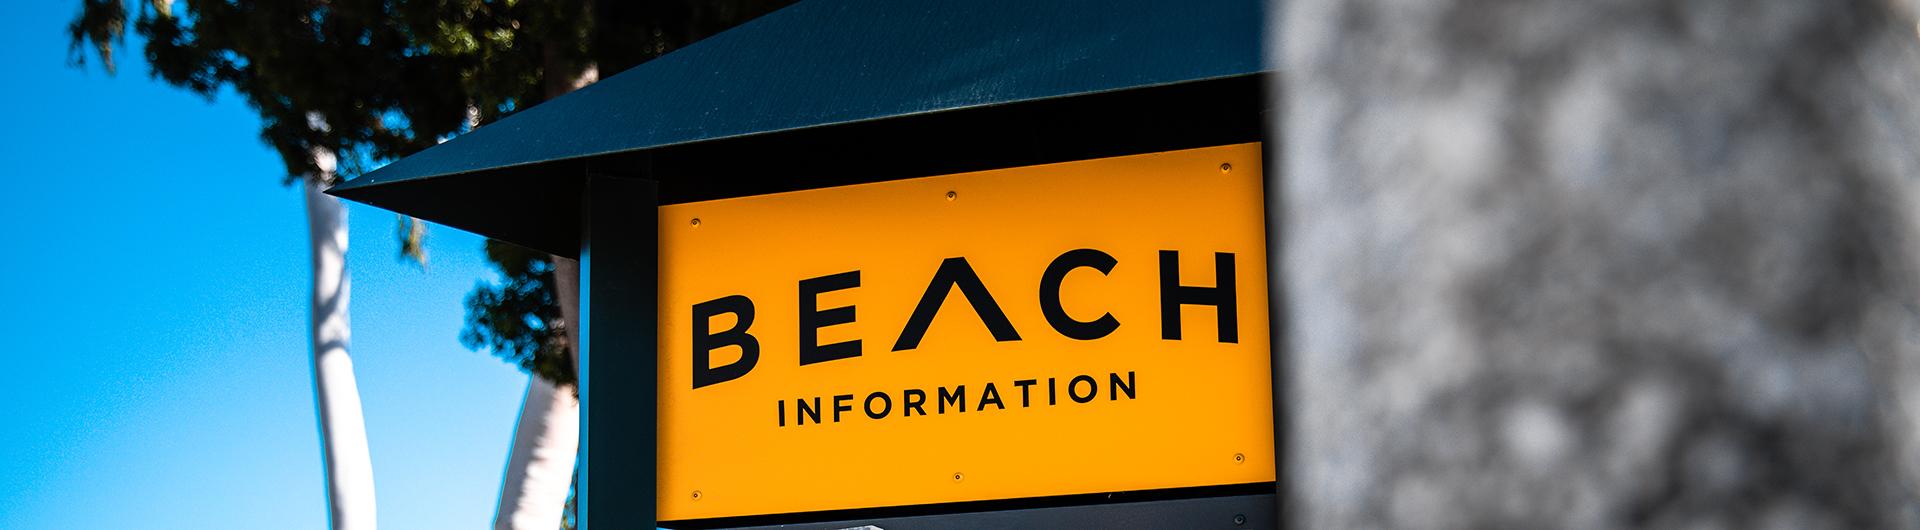 Beach Information Sign